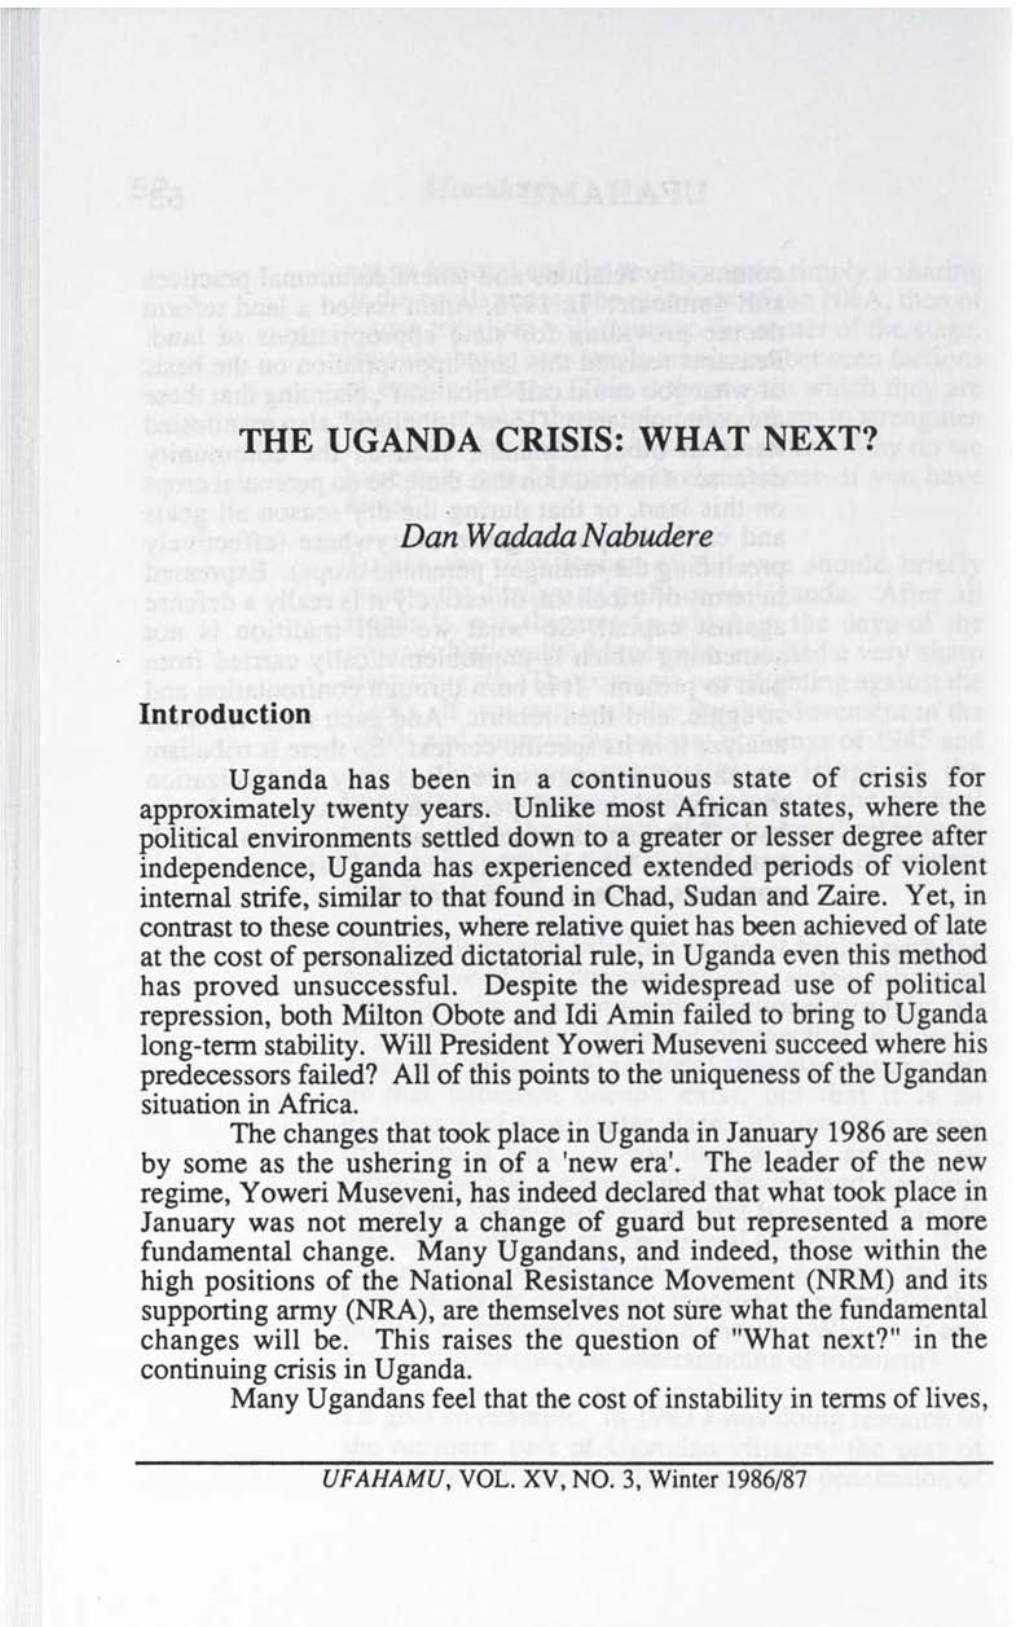 The Uganda Crisis: What Next?